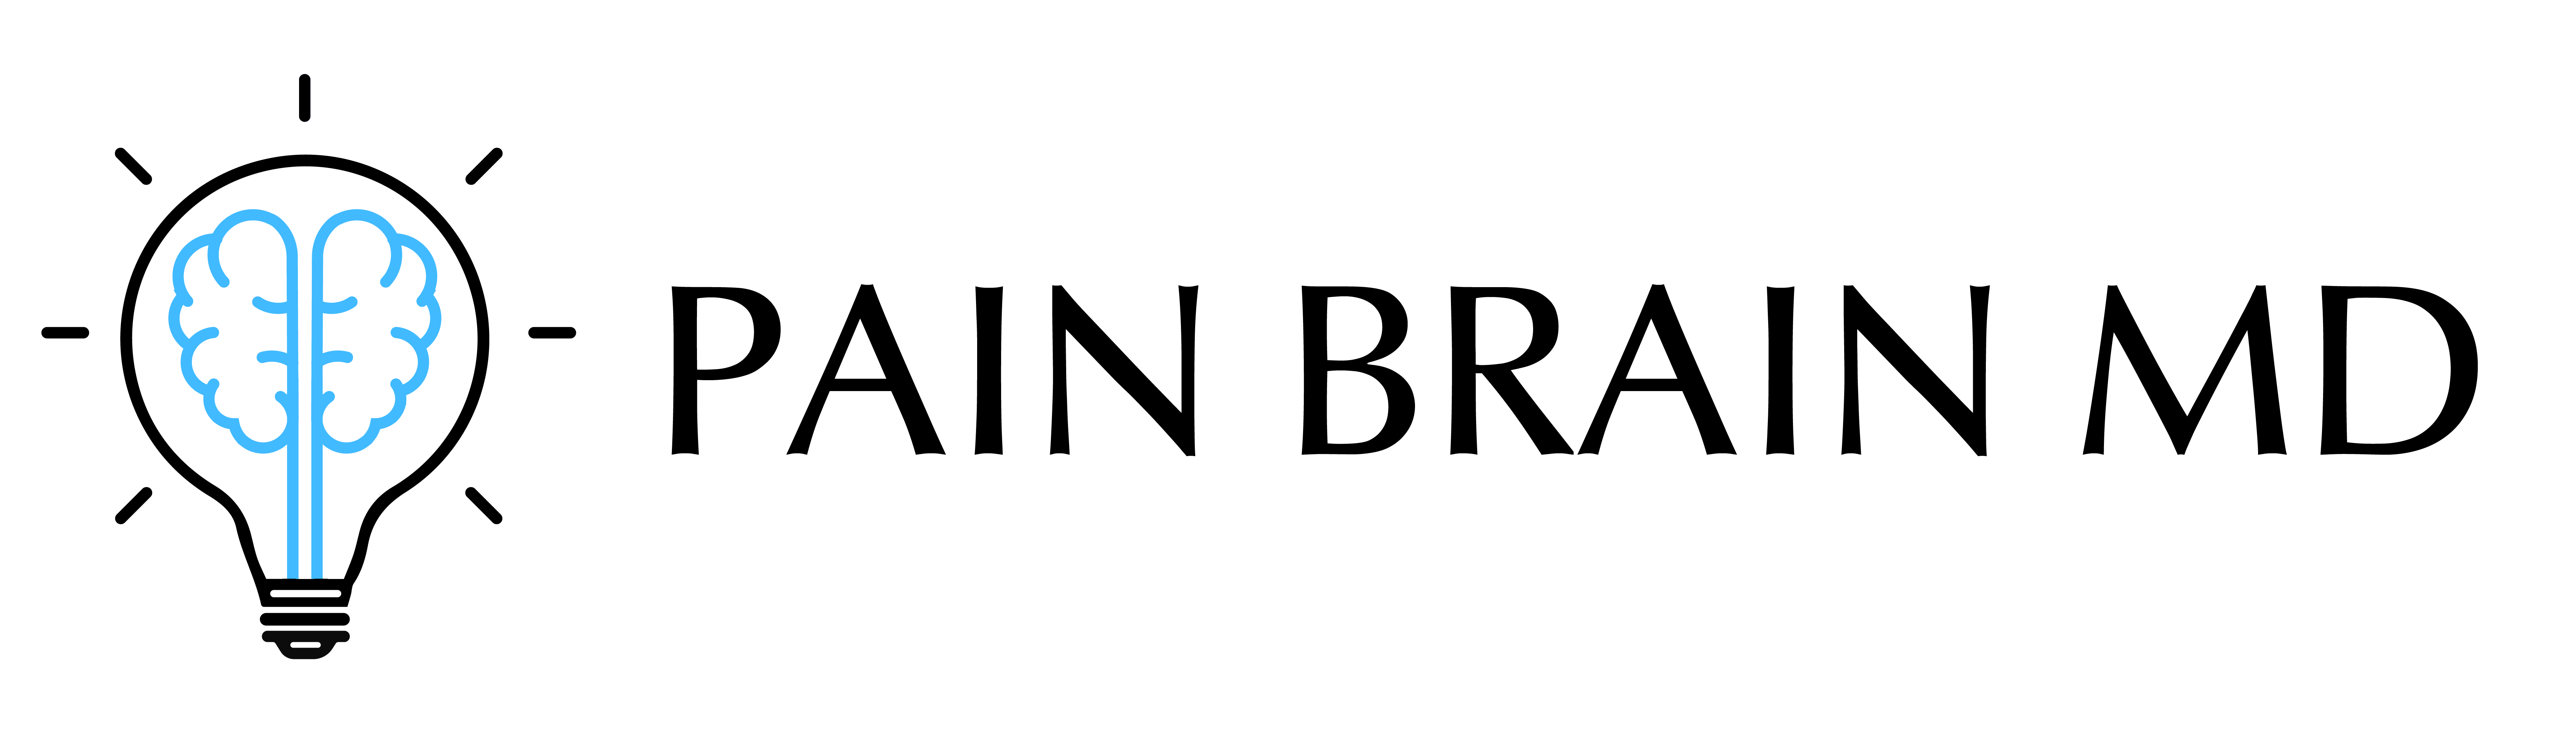 Pain Brain MD